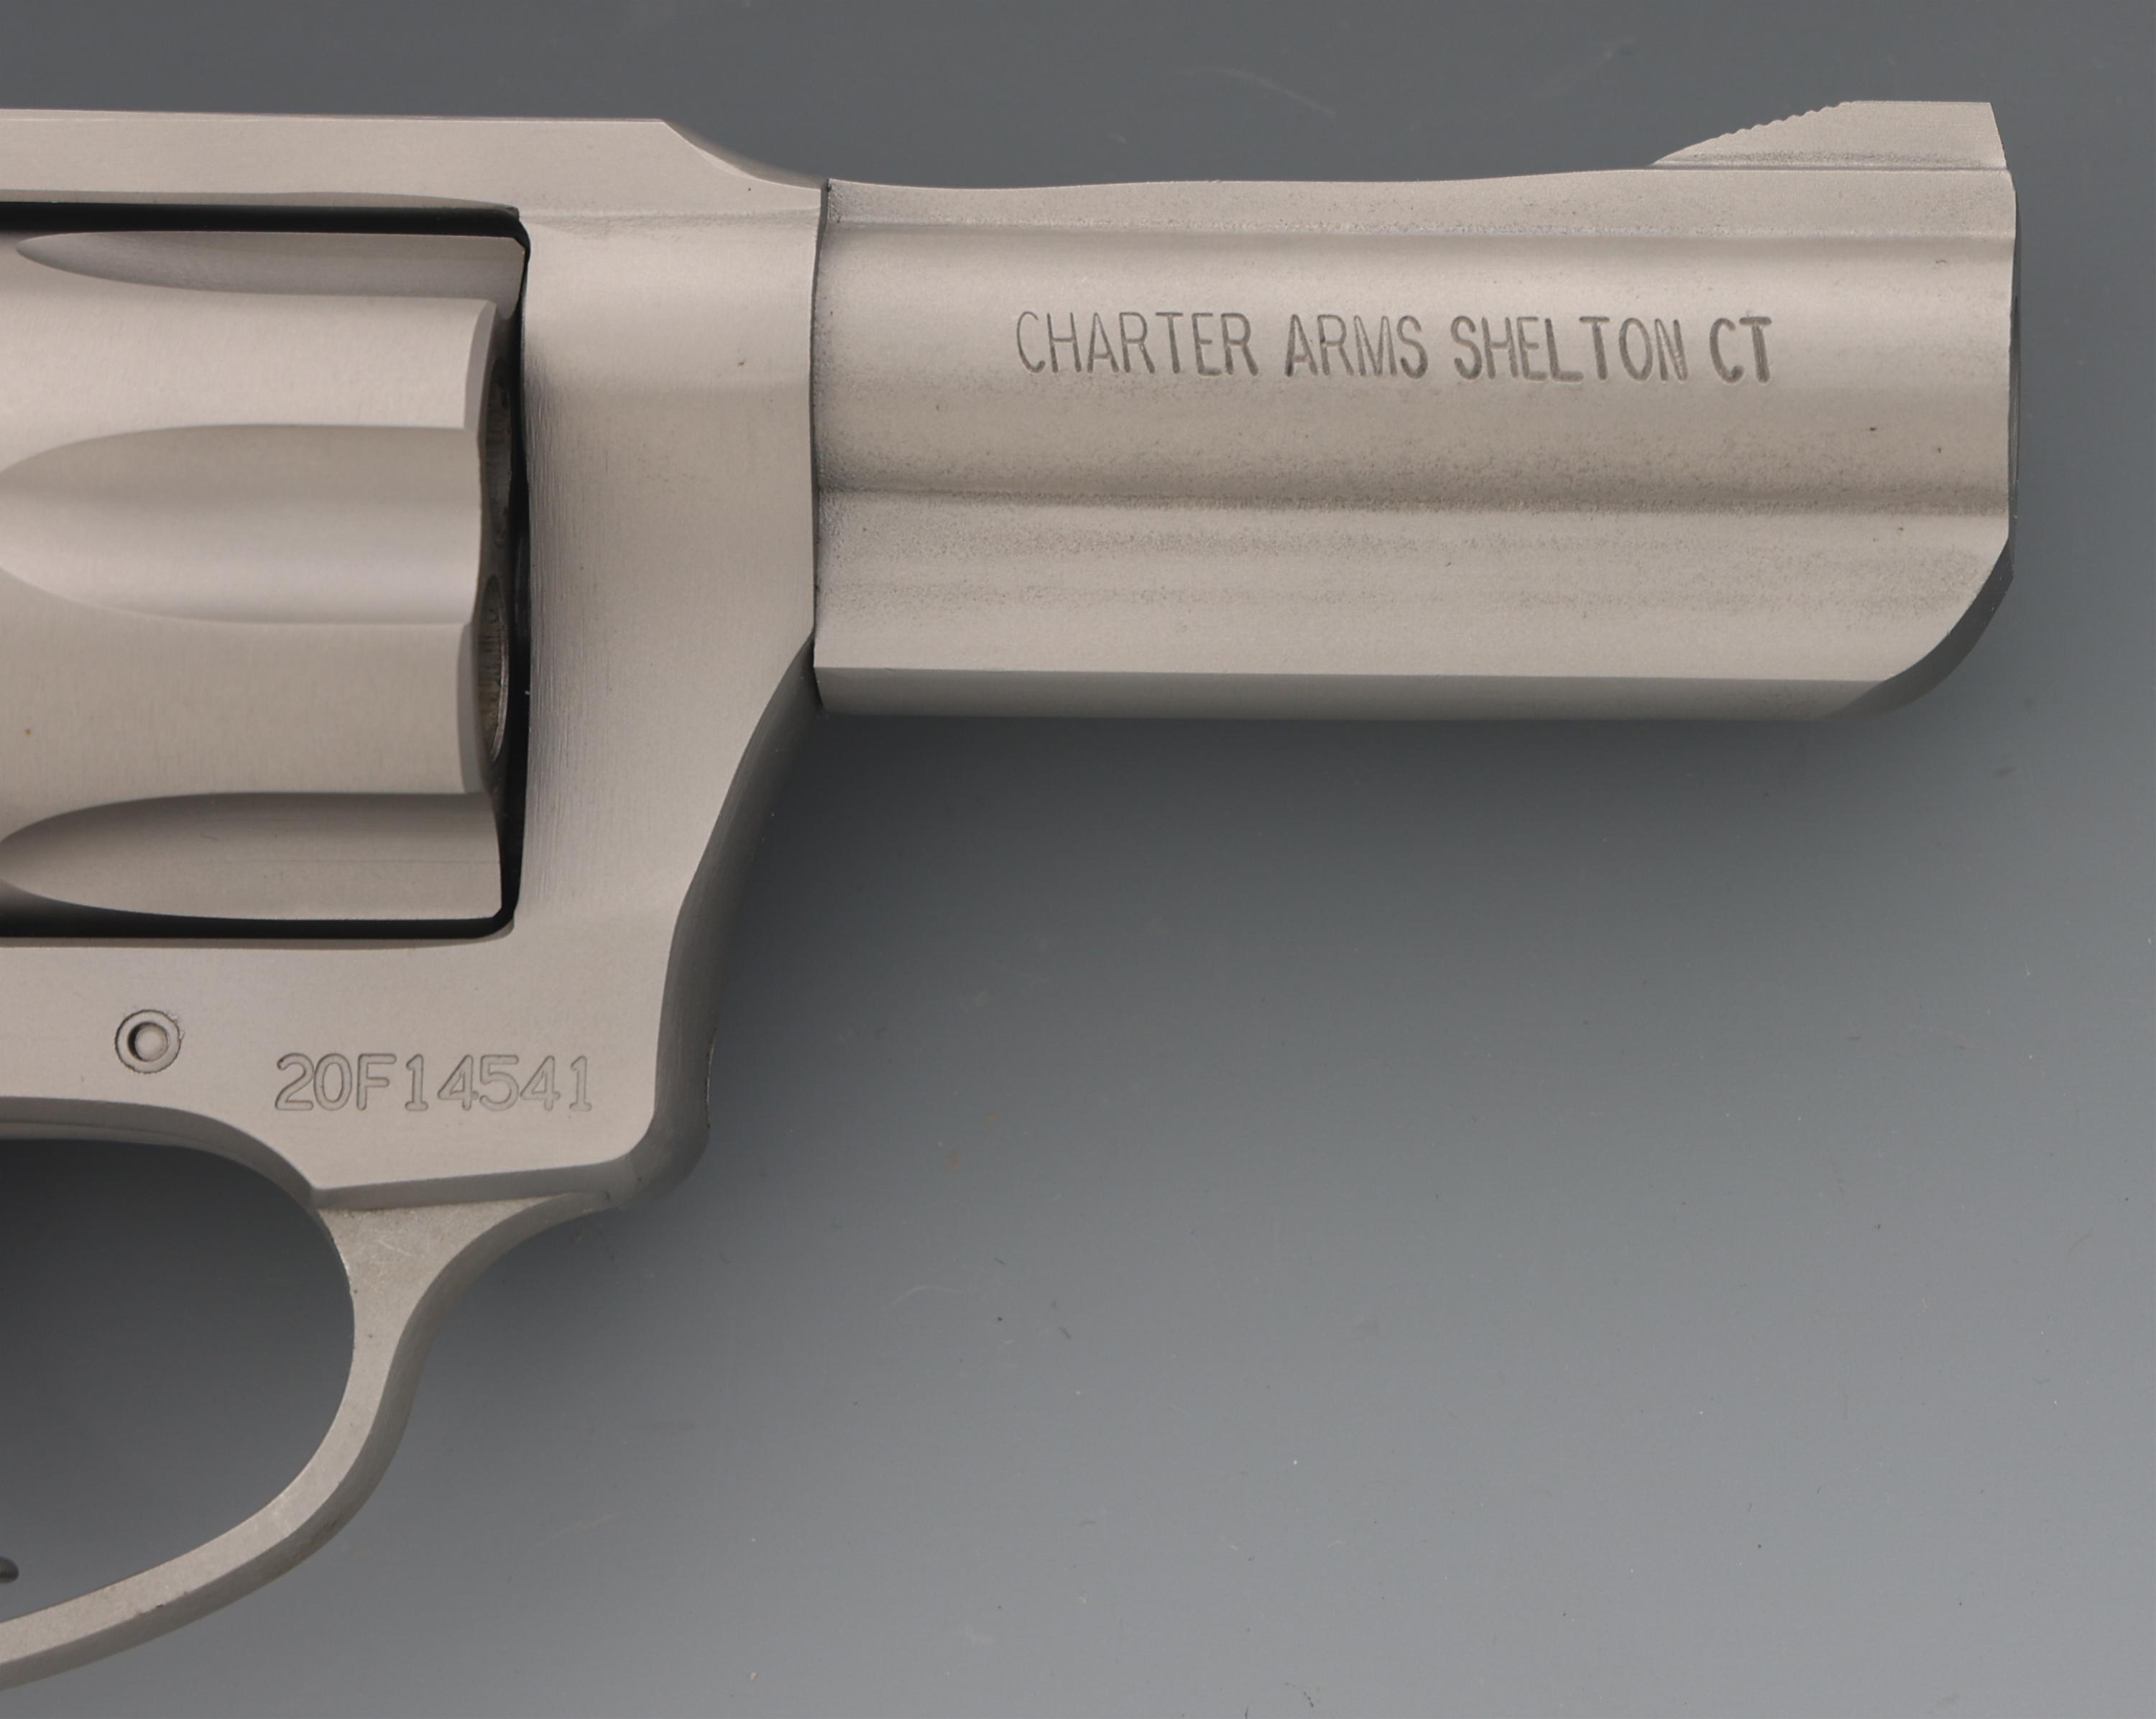 CHARTER ARMS MODEL PITBULL .380 CALIBER REVOLVER